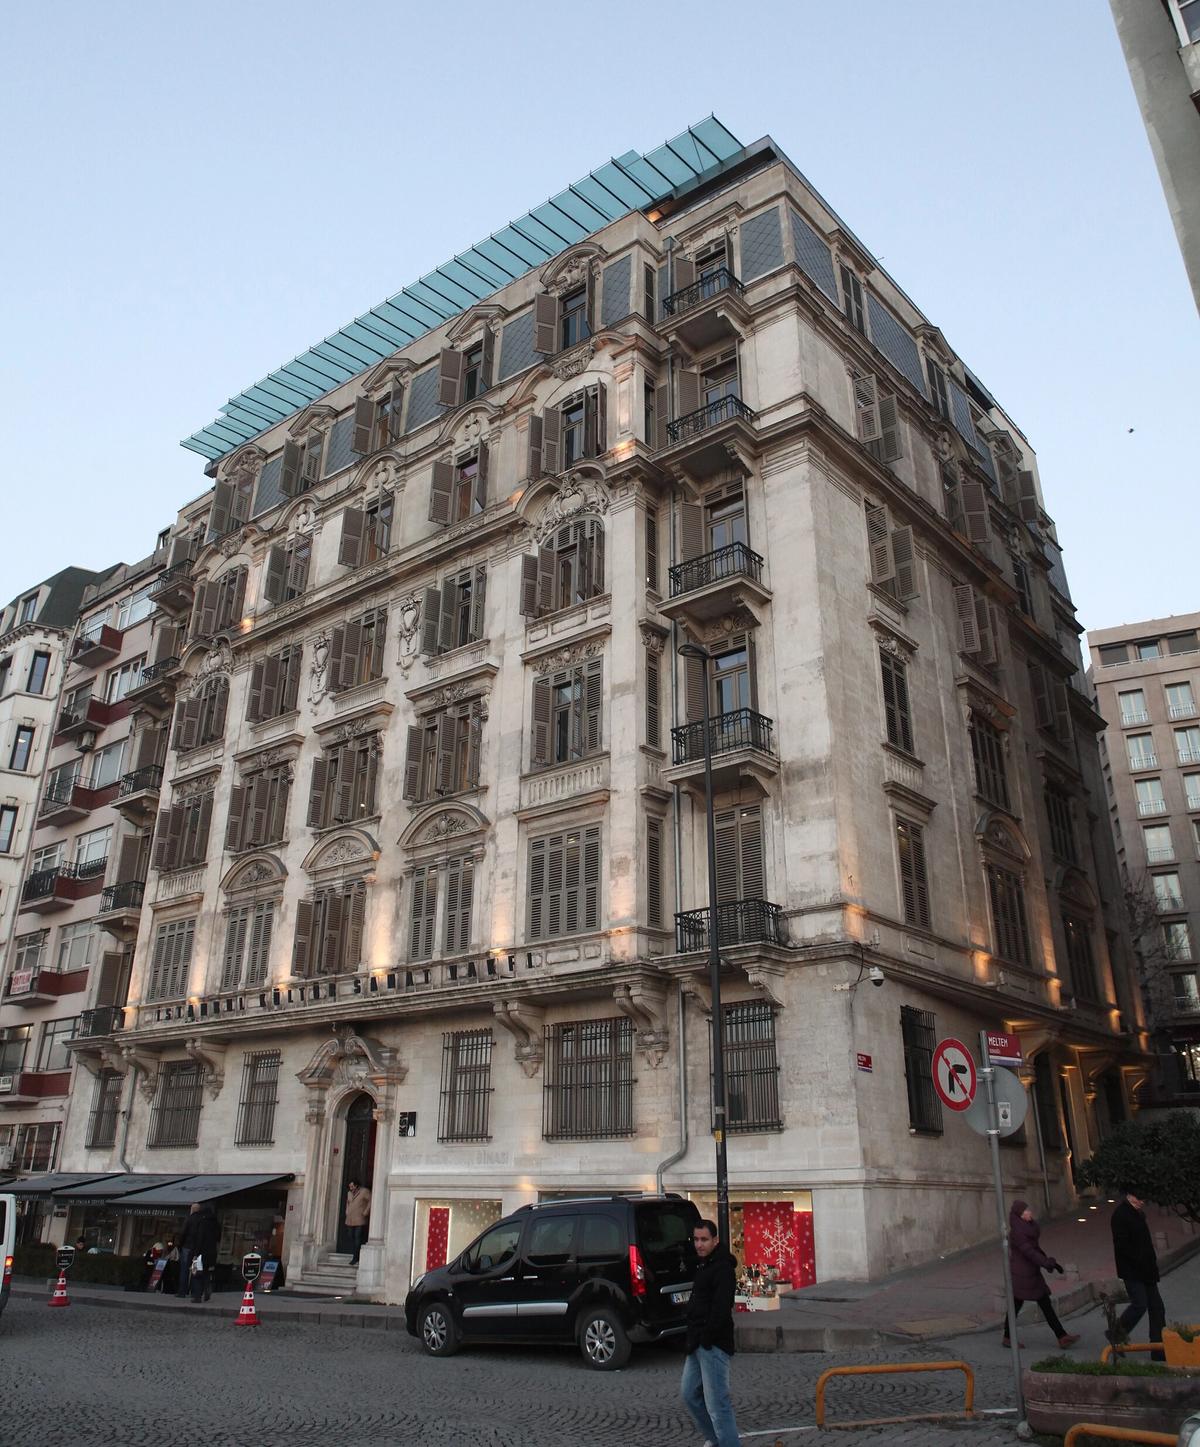 IKSV's headquarters in Istanbul

Ali Güler via Wikimedia Commons